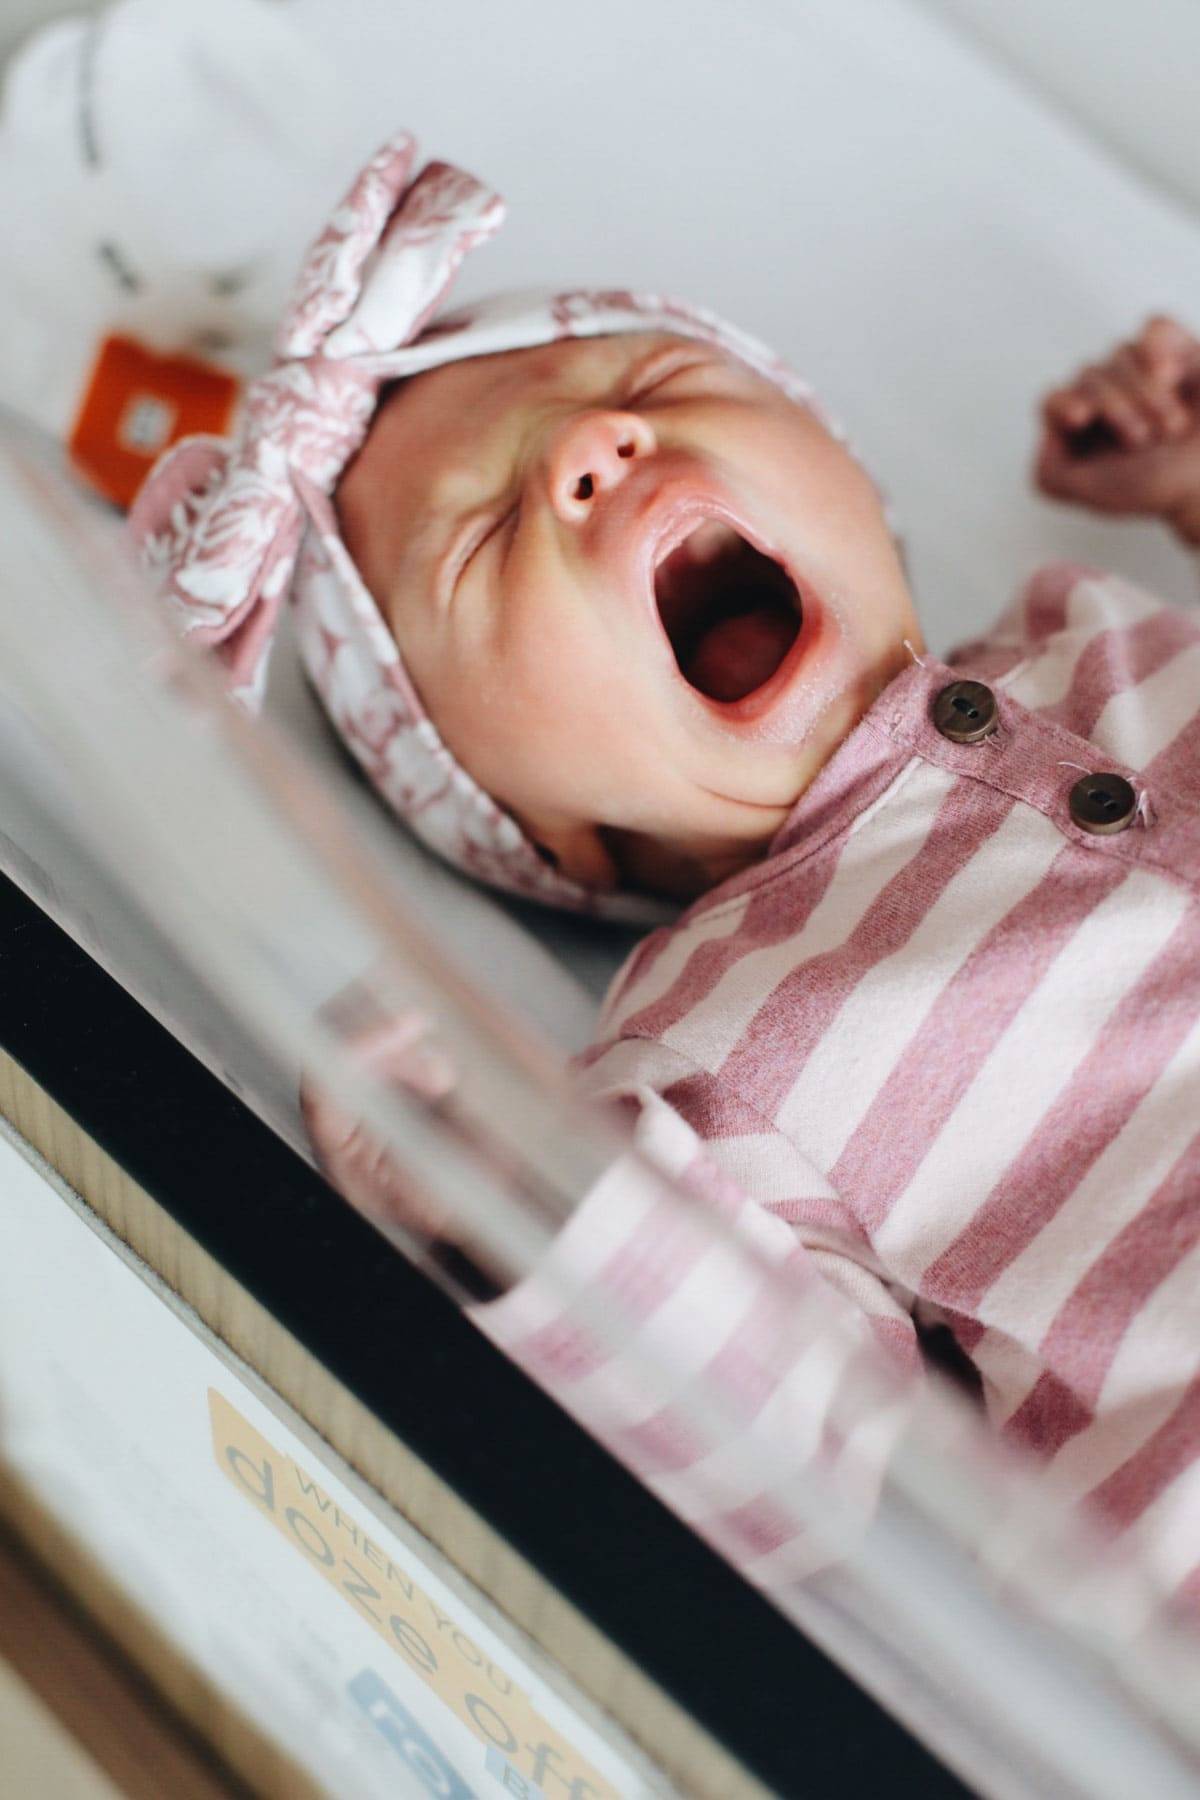 Solvi yawning in the bassinet.